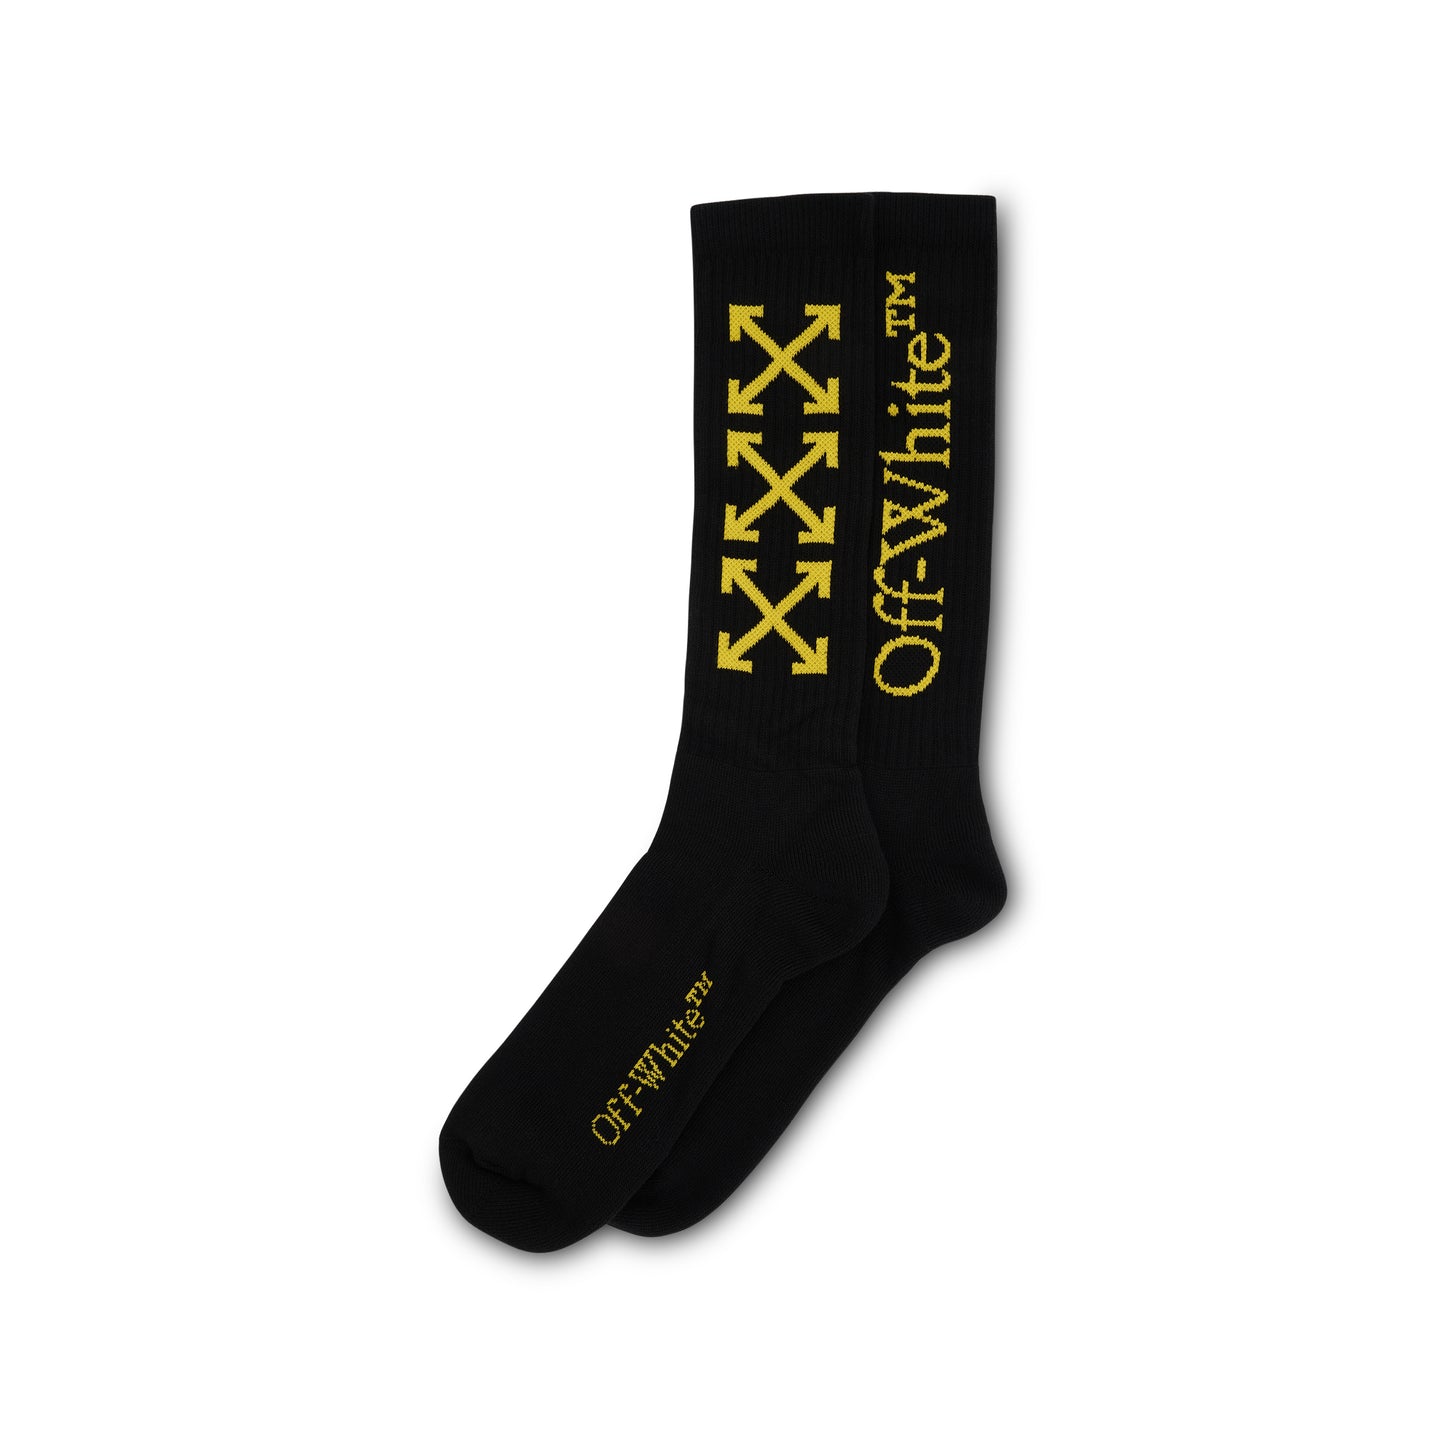 Arrow Bookish Medium Socks in Black/Yellow